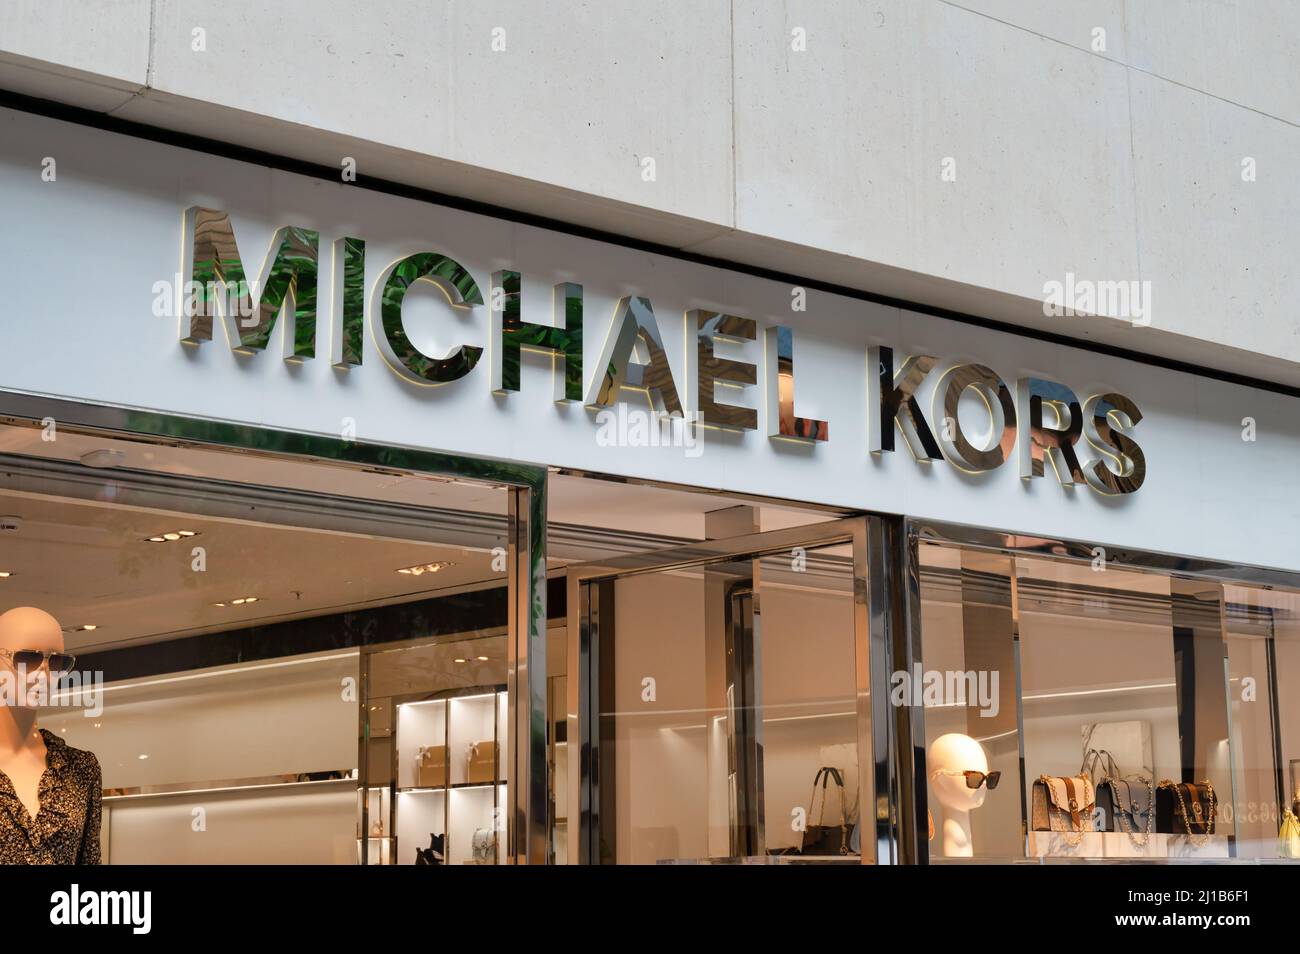 Michael Kors Storefront on Fifth Avenue, NYC, USA Stock Photo - Alamy